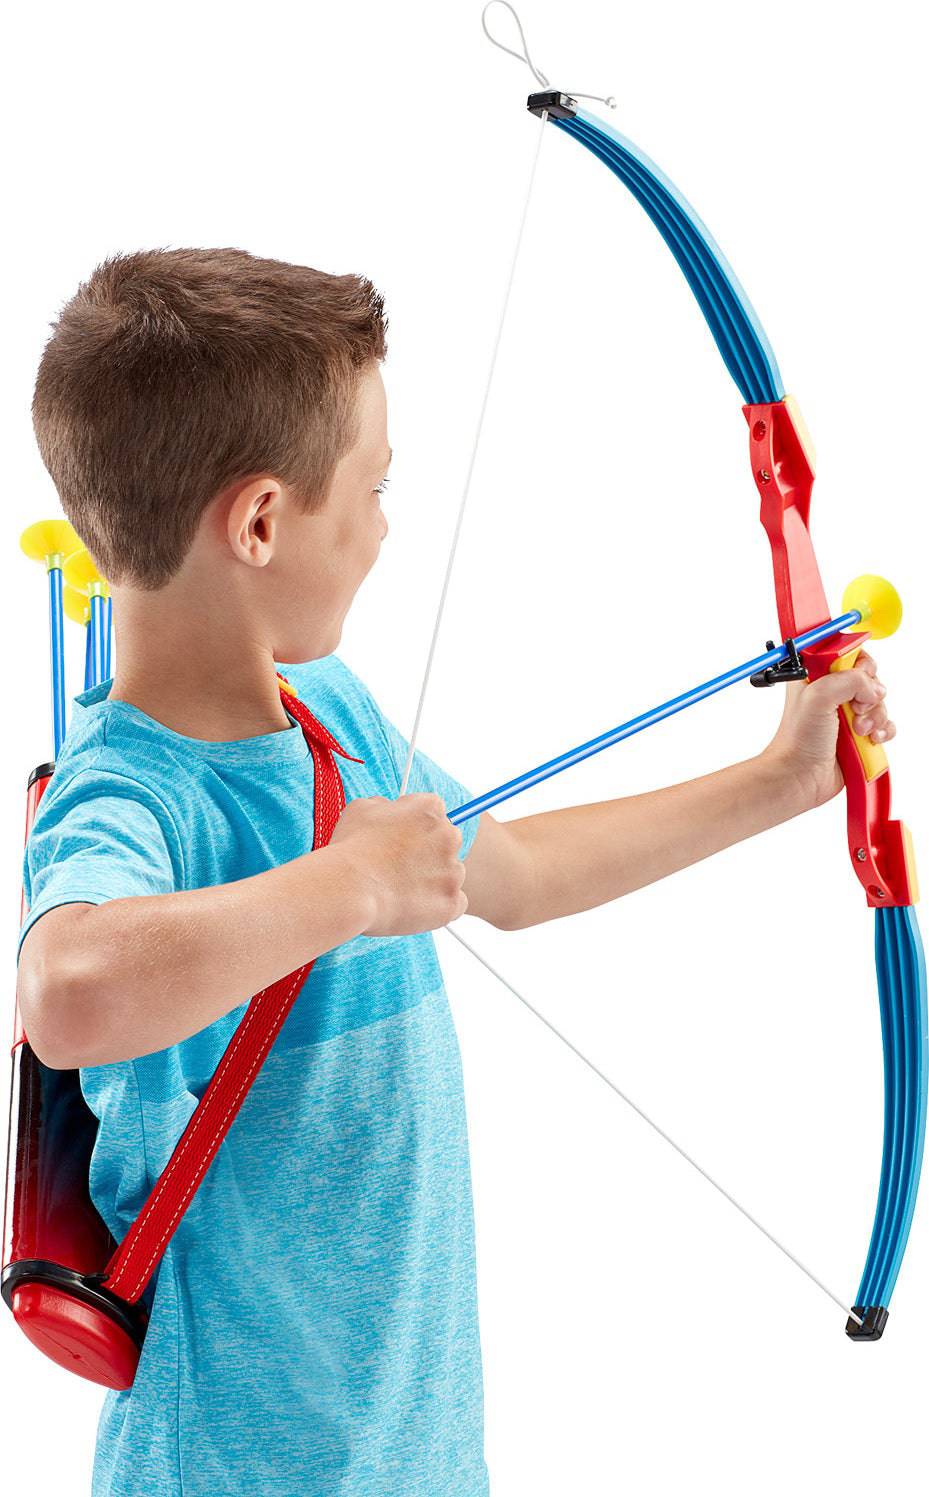 Deluxe Archery Set - A Child's Delight